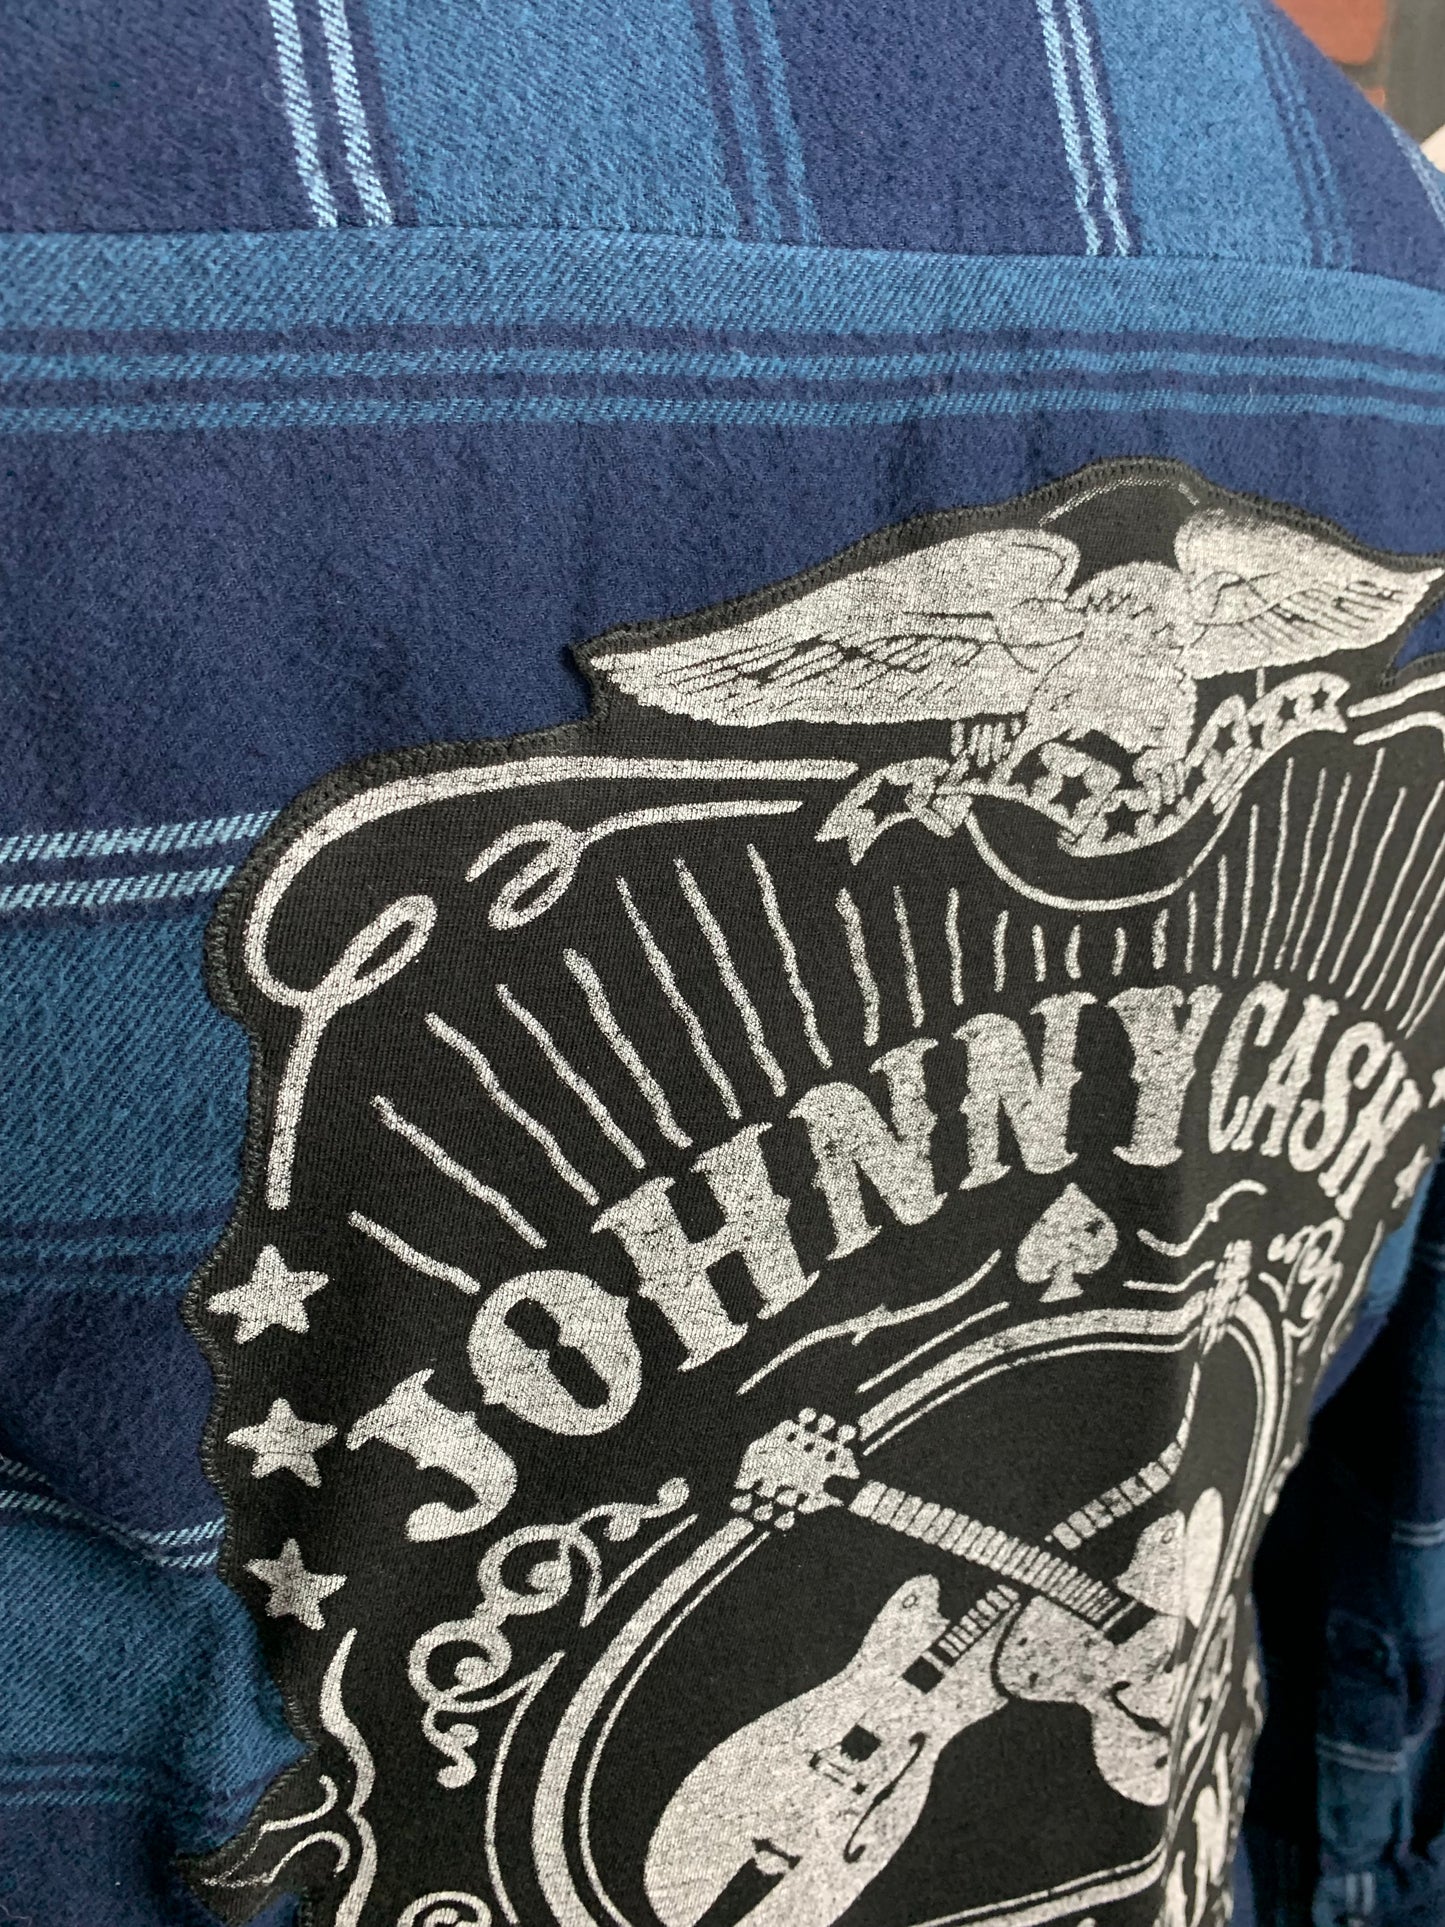 Johnny Cash Flannel Shirt Custom Rework L